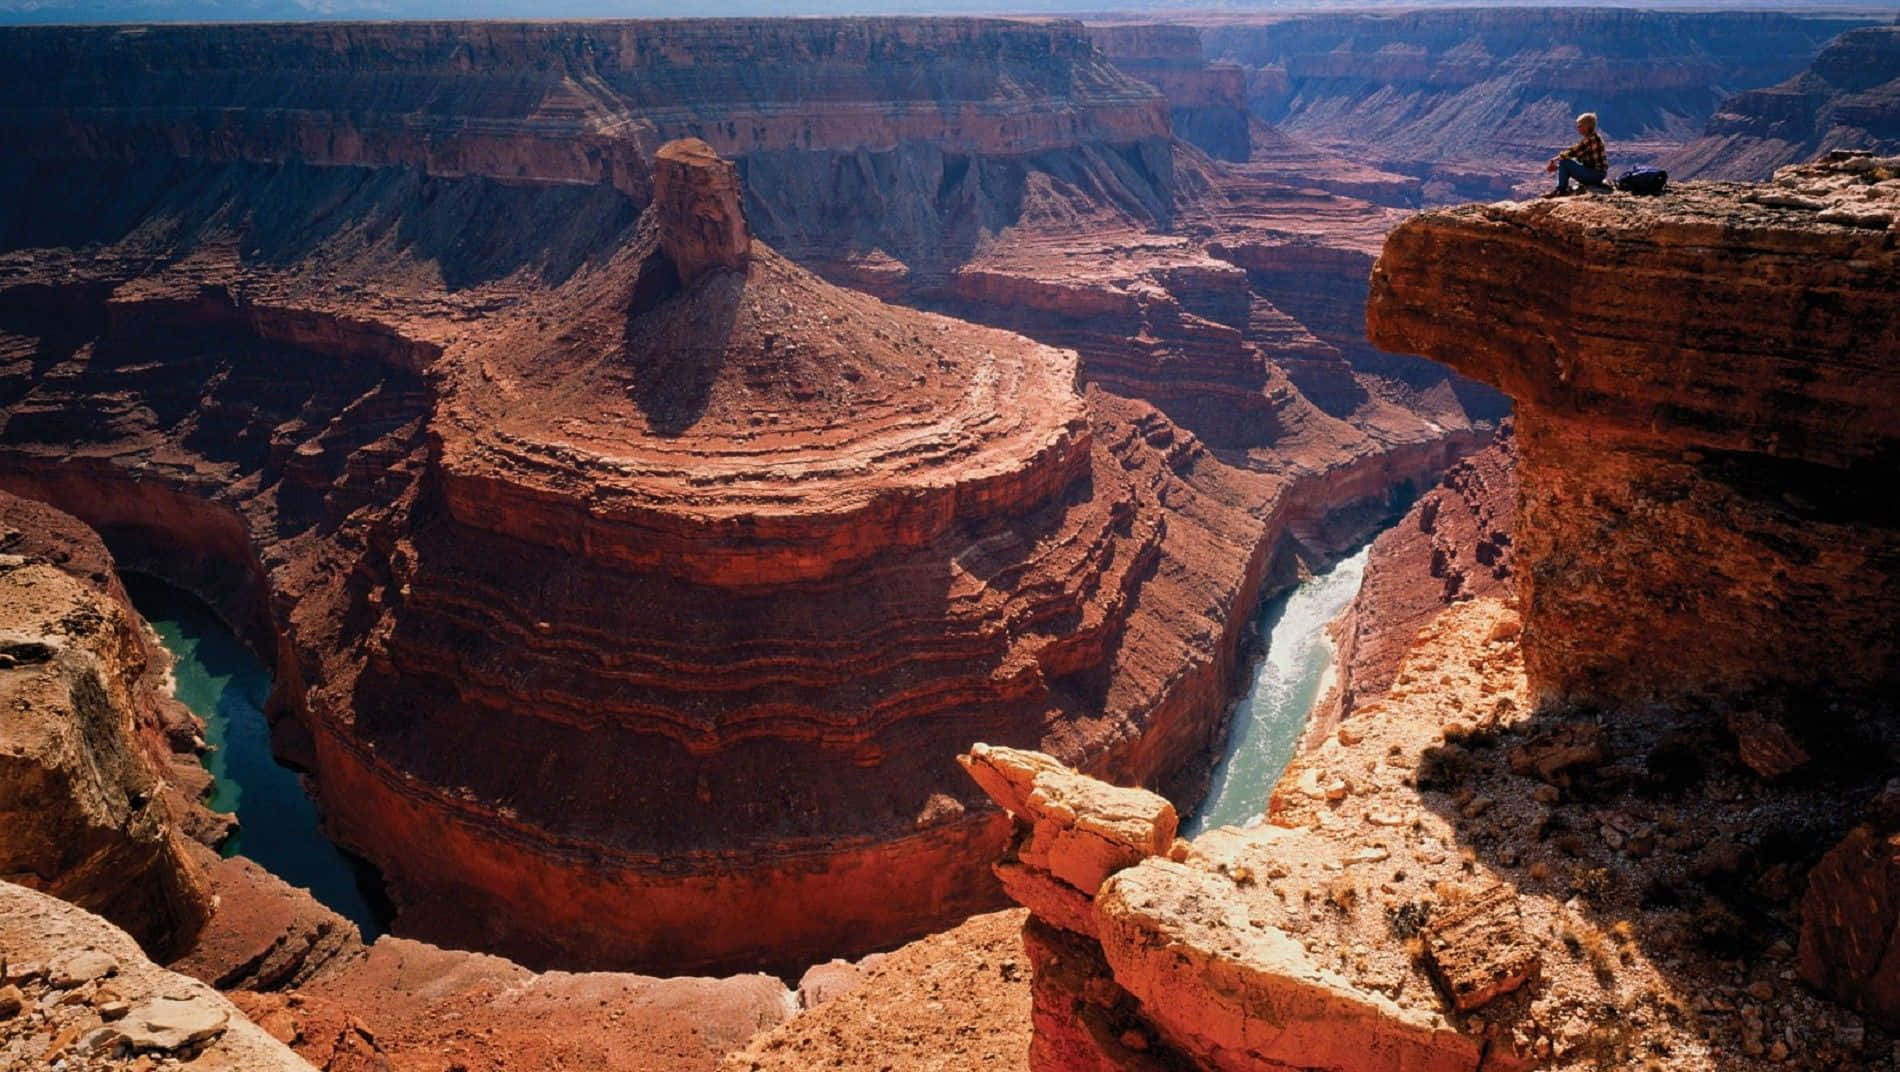 The Scenic View of Arizona's Red Rocks